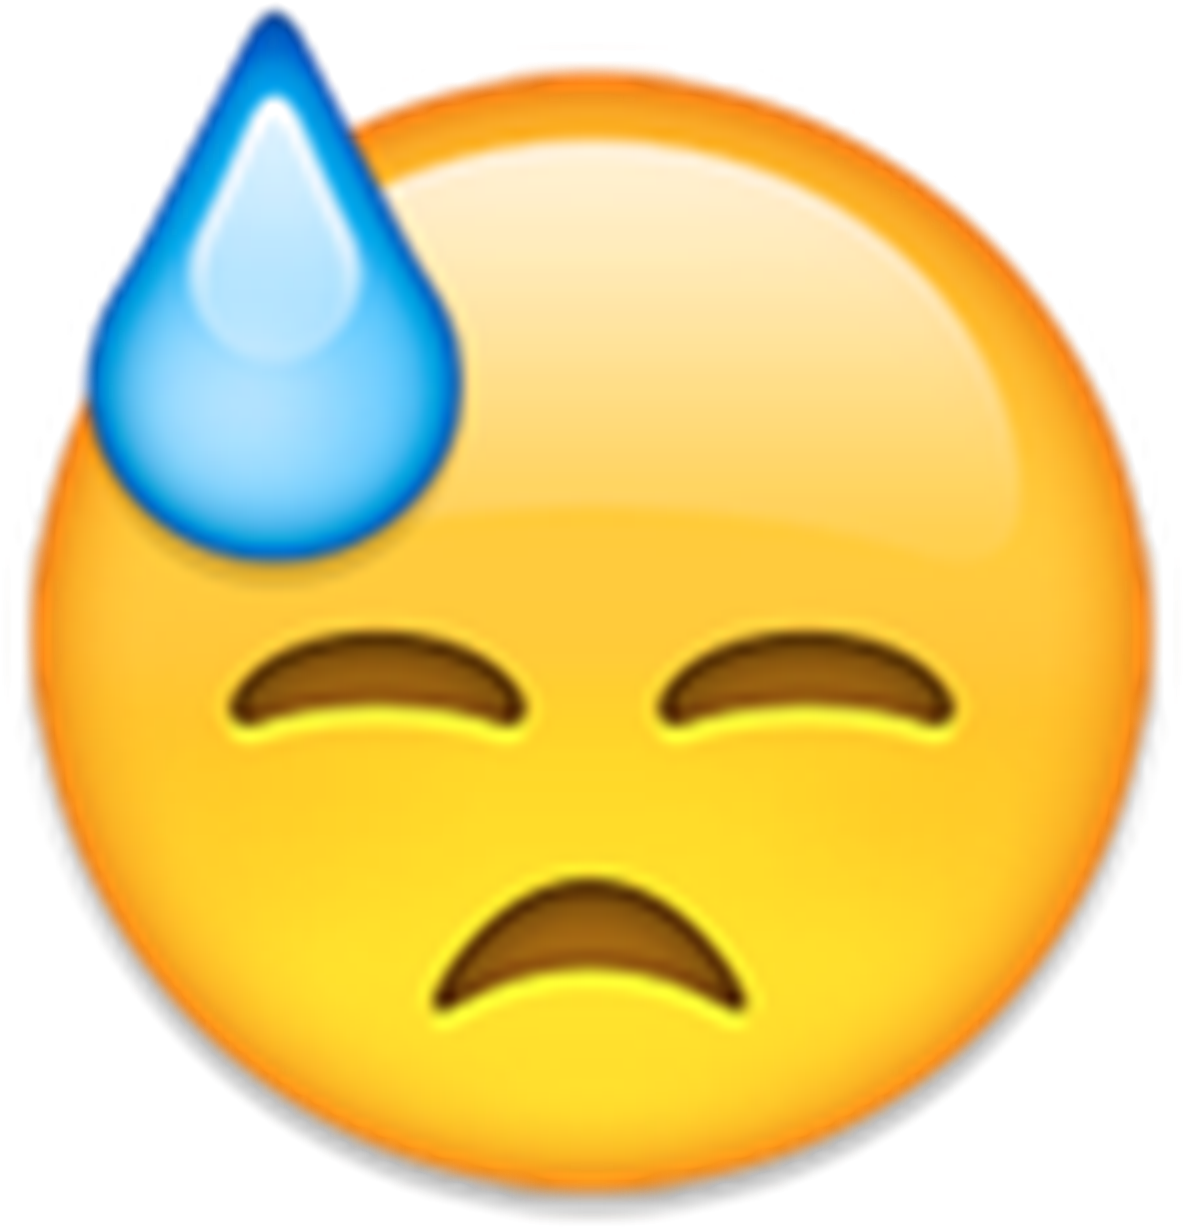 U 1f613 - Face With Cold Sweat Emoji (1280x1280)